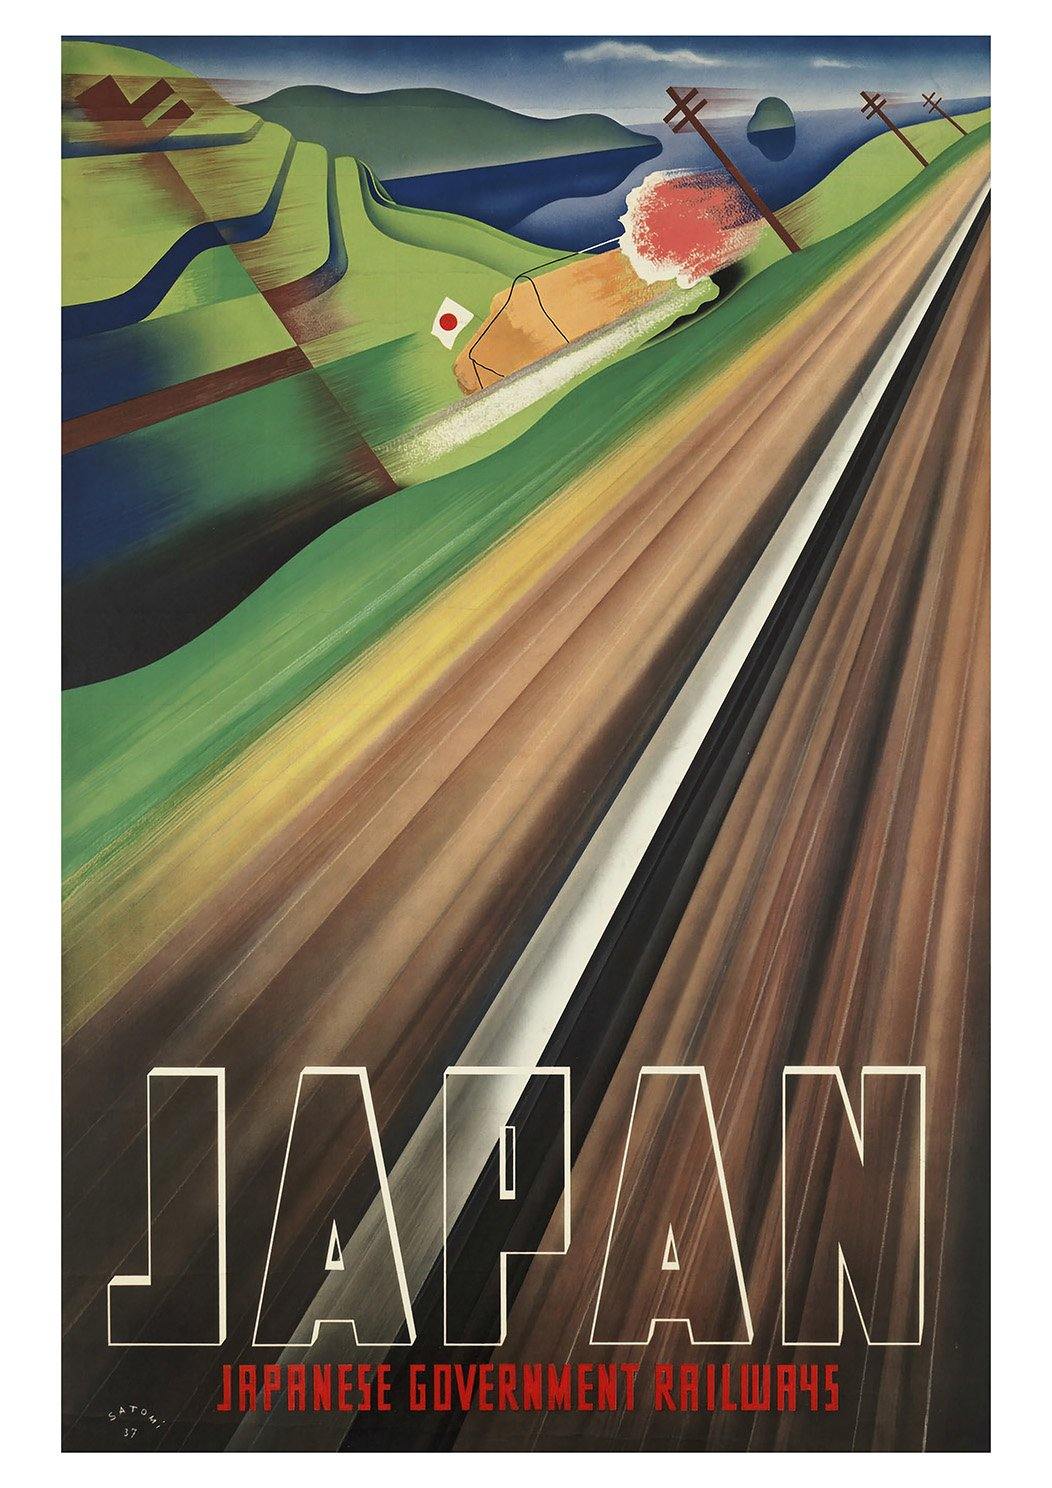 JAPAN TRAIN POSTER: Vintage Japanese Railway Print - Pimlico Prints